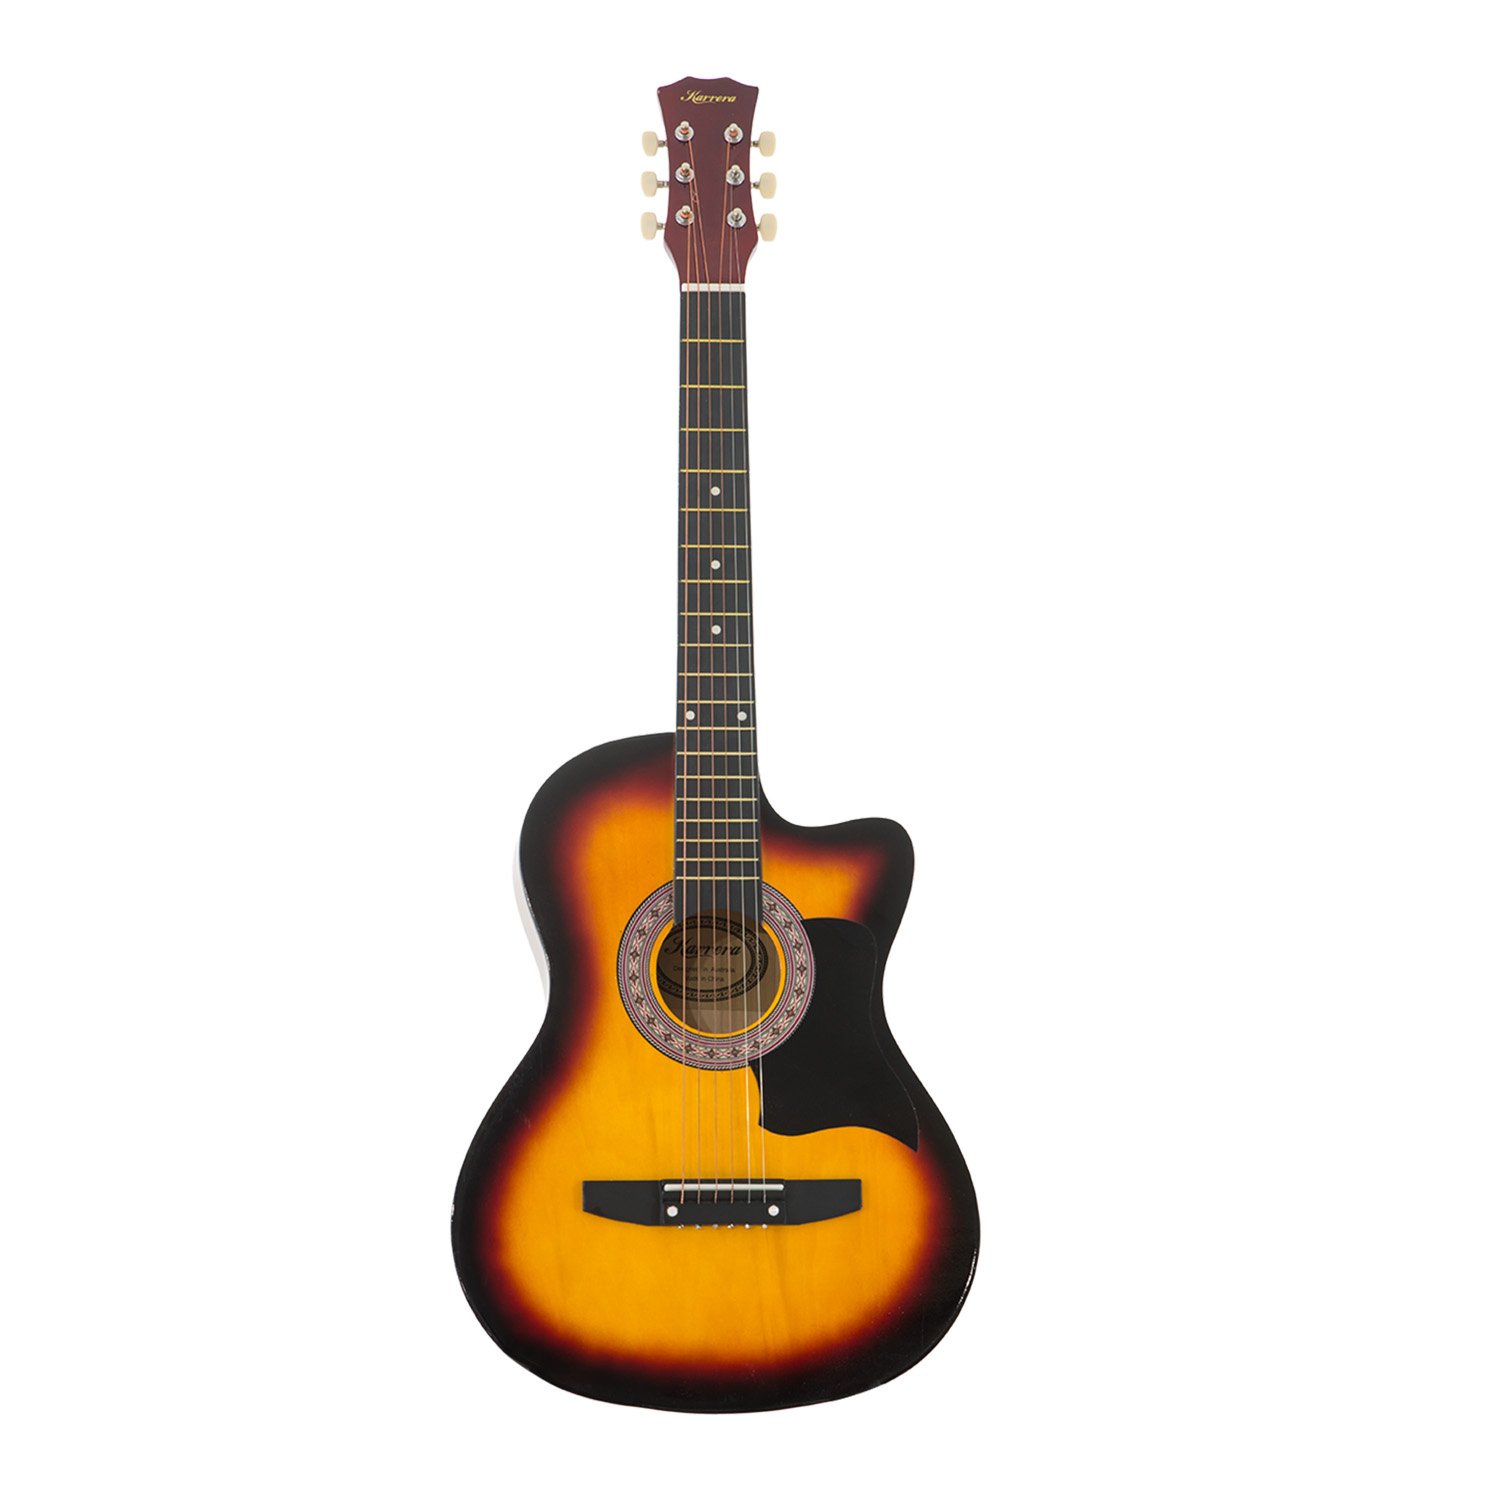 Karrera 38in Pro Cutaway Acoustic Guitar with Bag Strings - Sun Burst 2